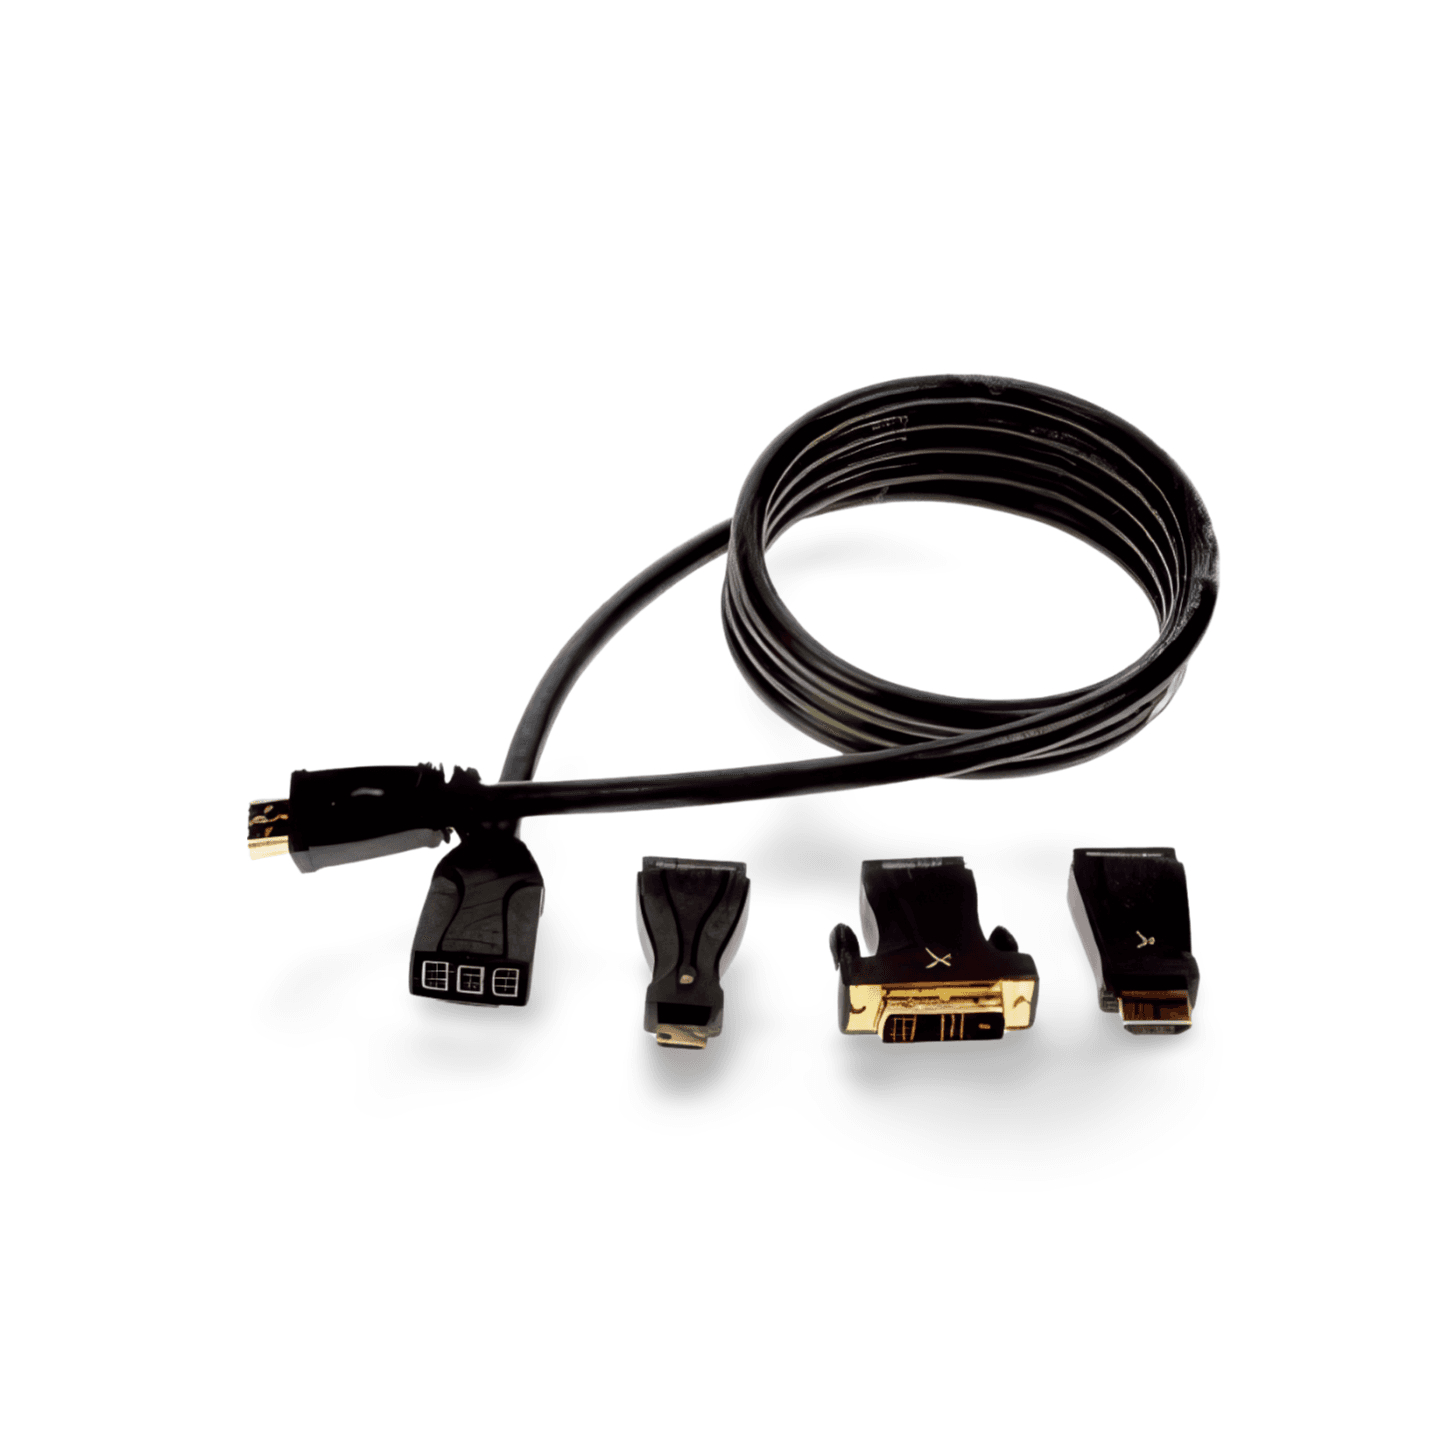 6ft GXQH 06 HDMI Cable Adapter Kit GoldX black